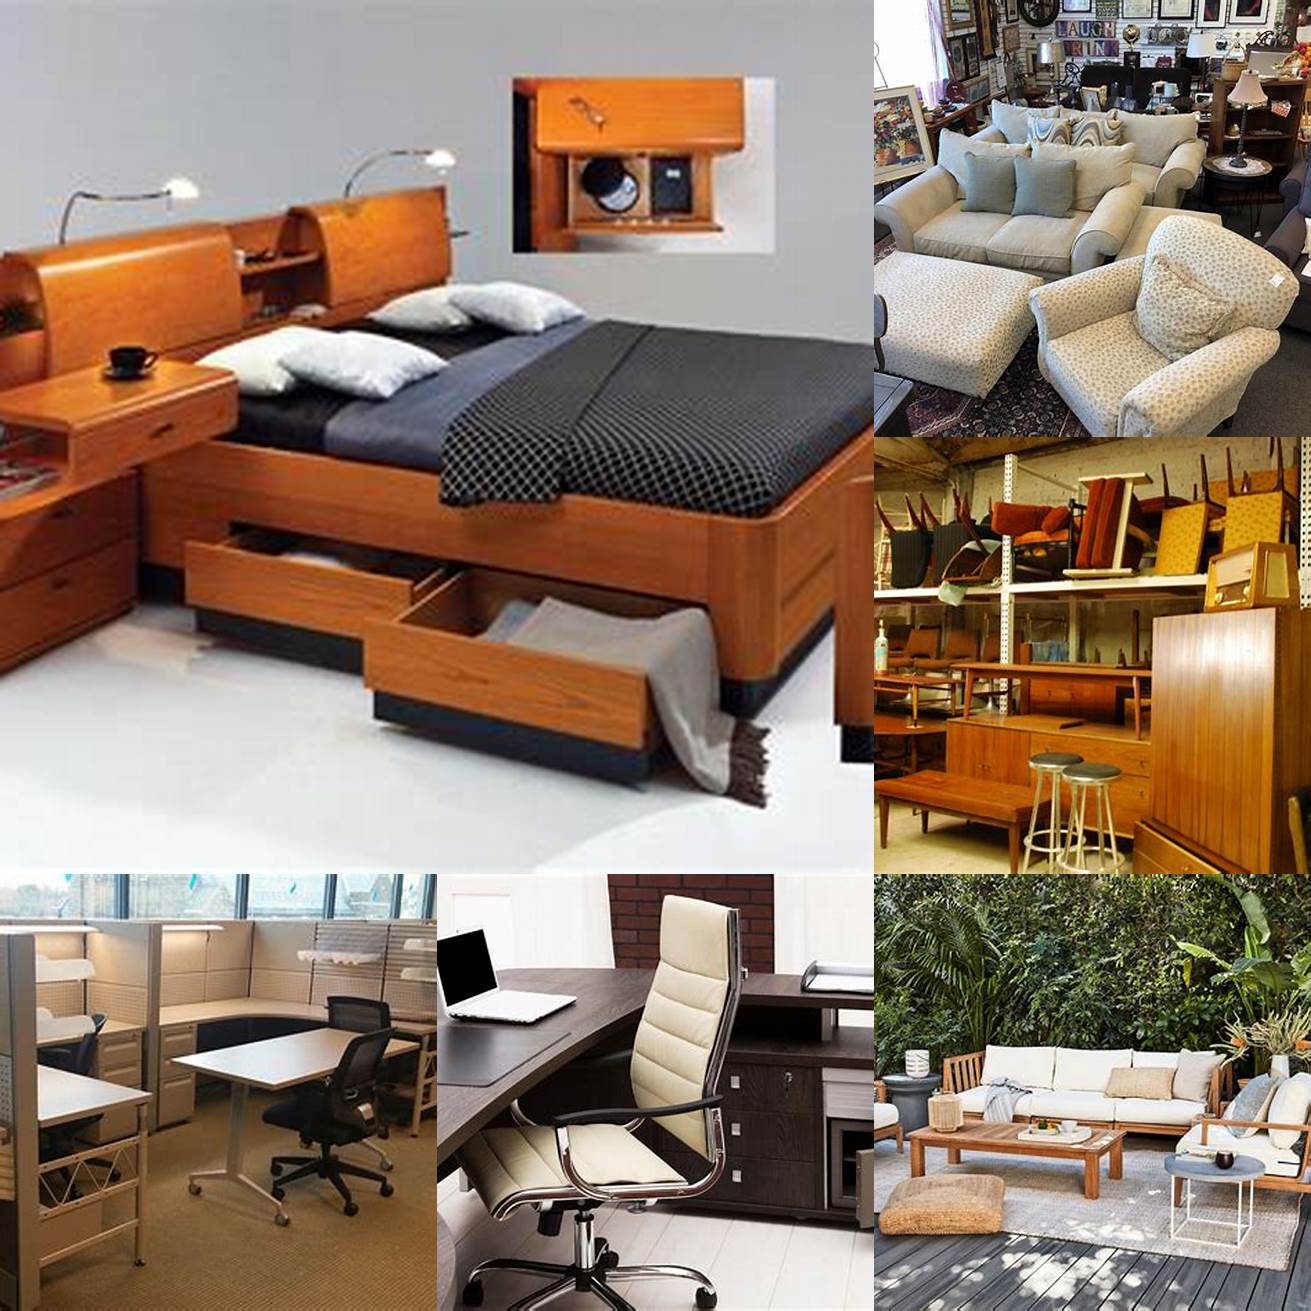 Furniture in Use